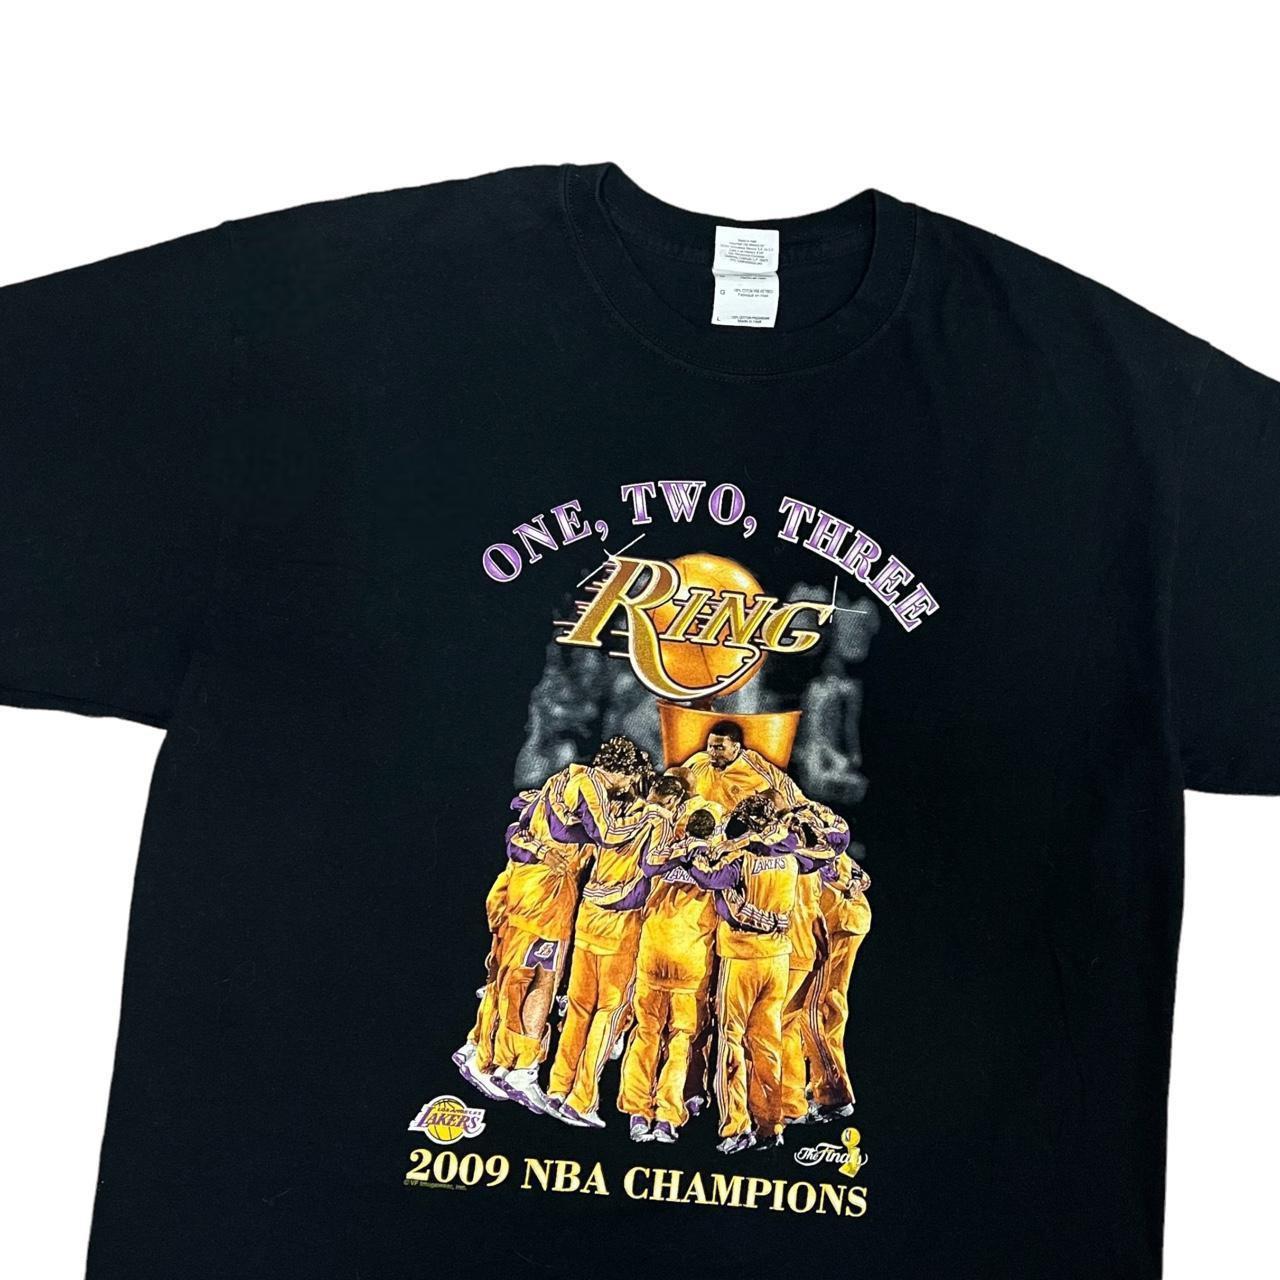 NBA Men's Black and Yellow T-shirt (3)